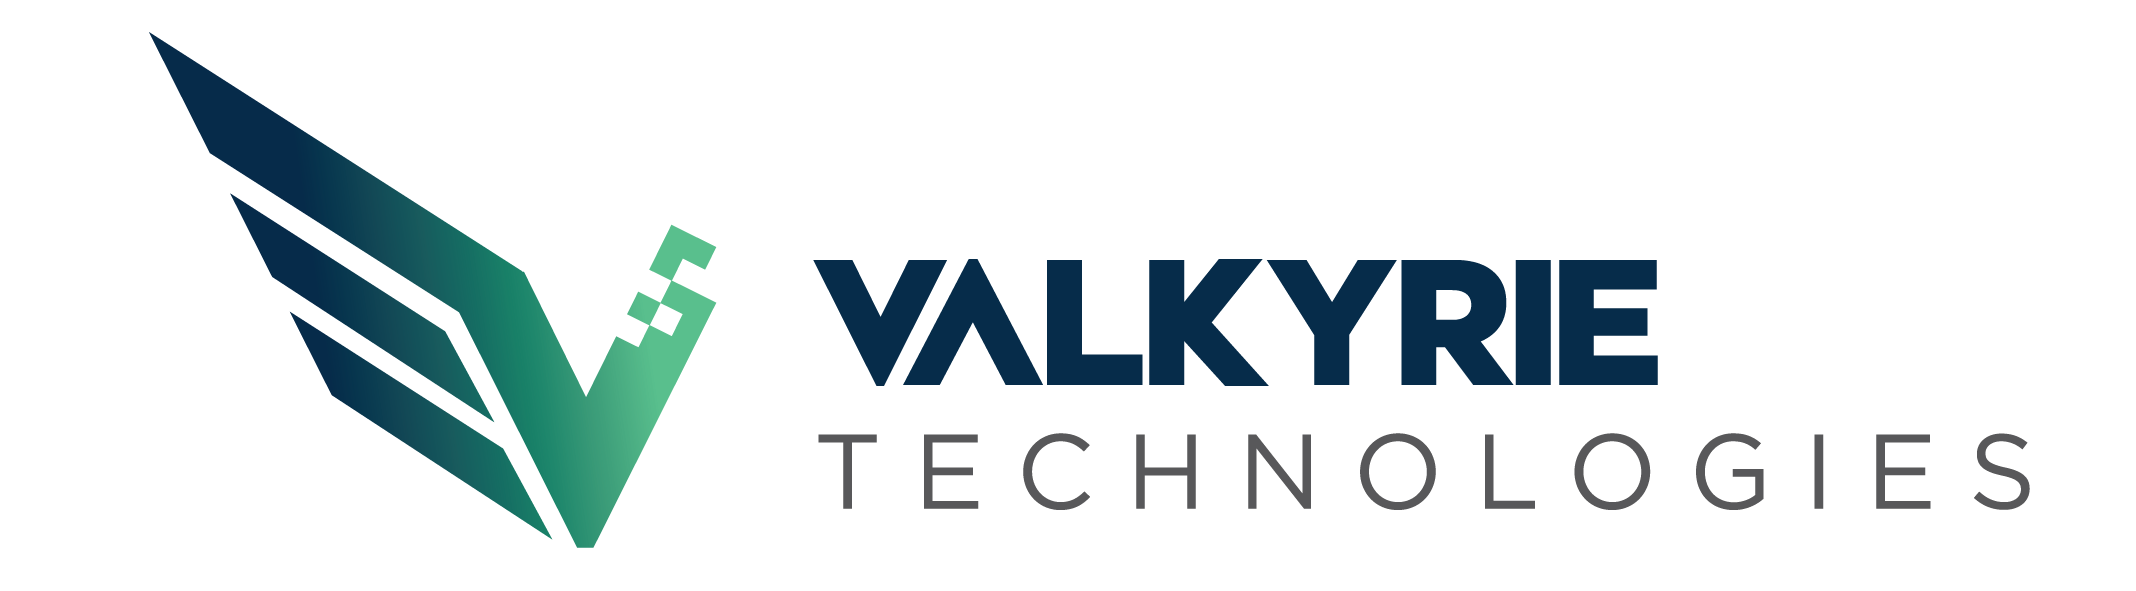 Valkyrie Technologies